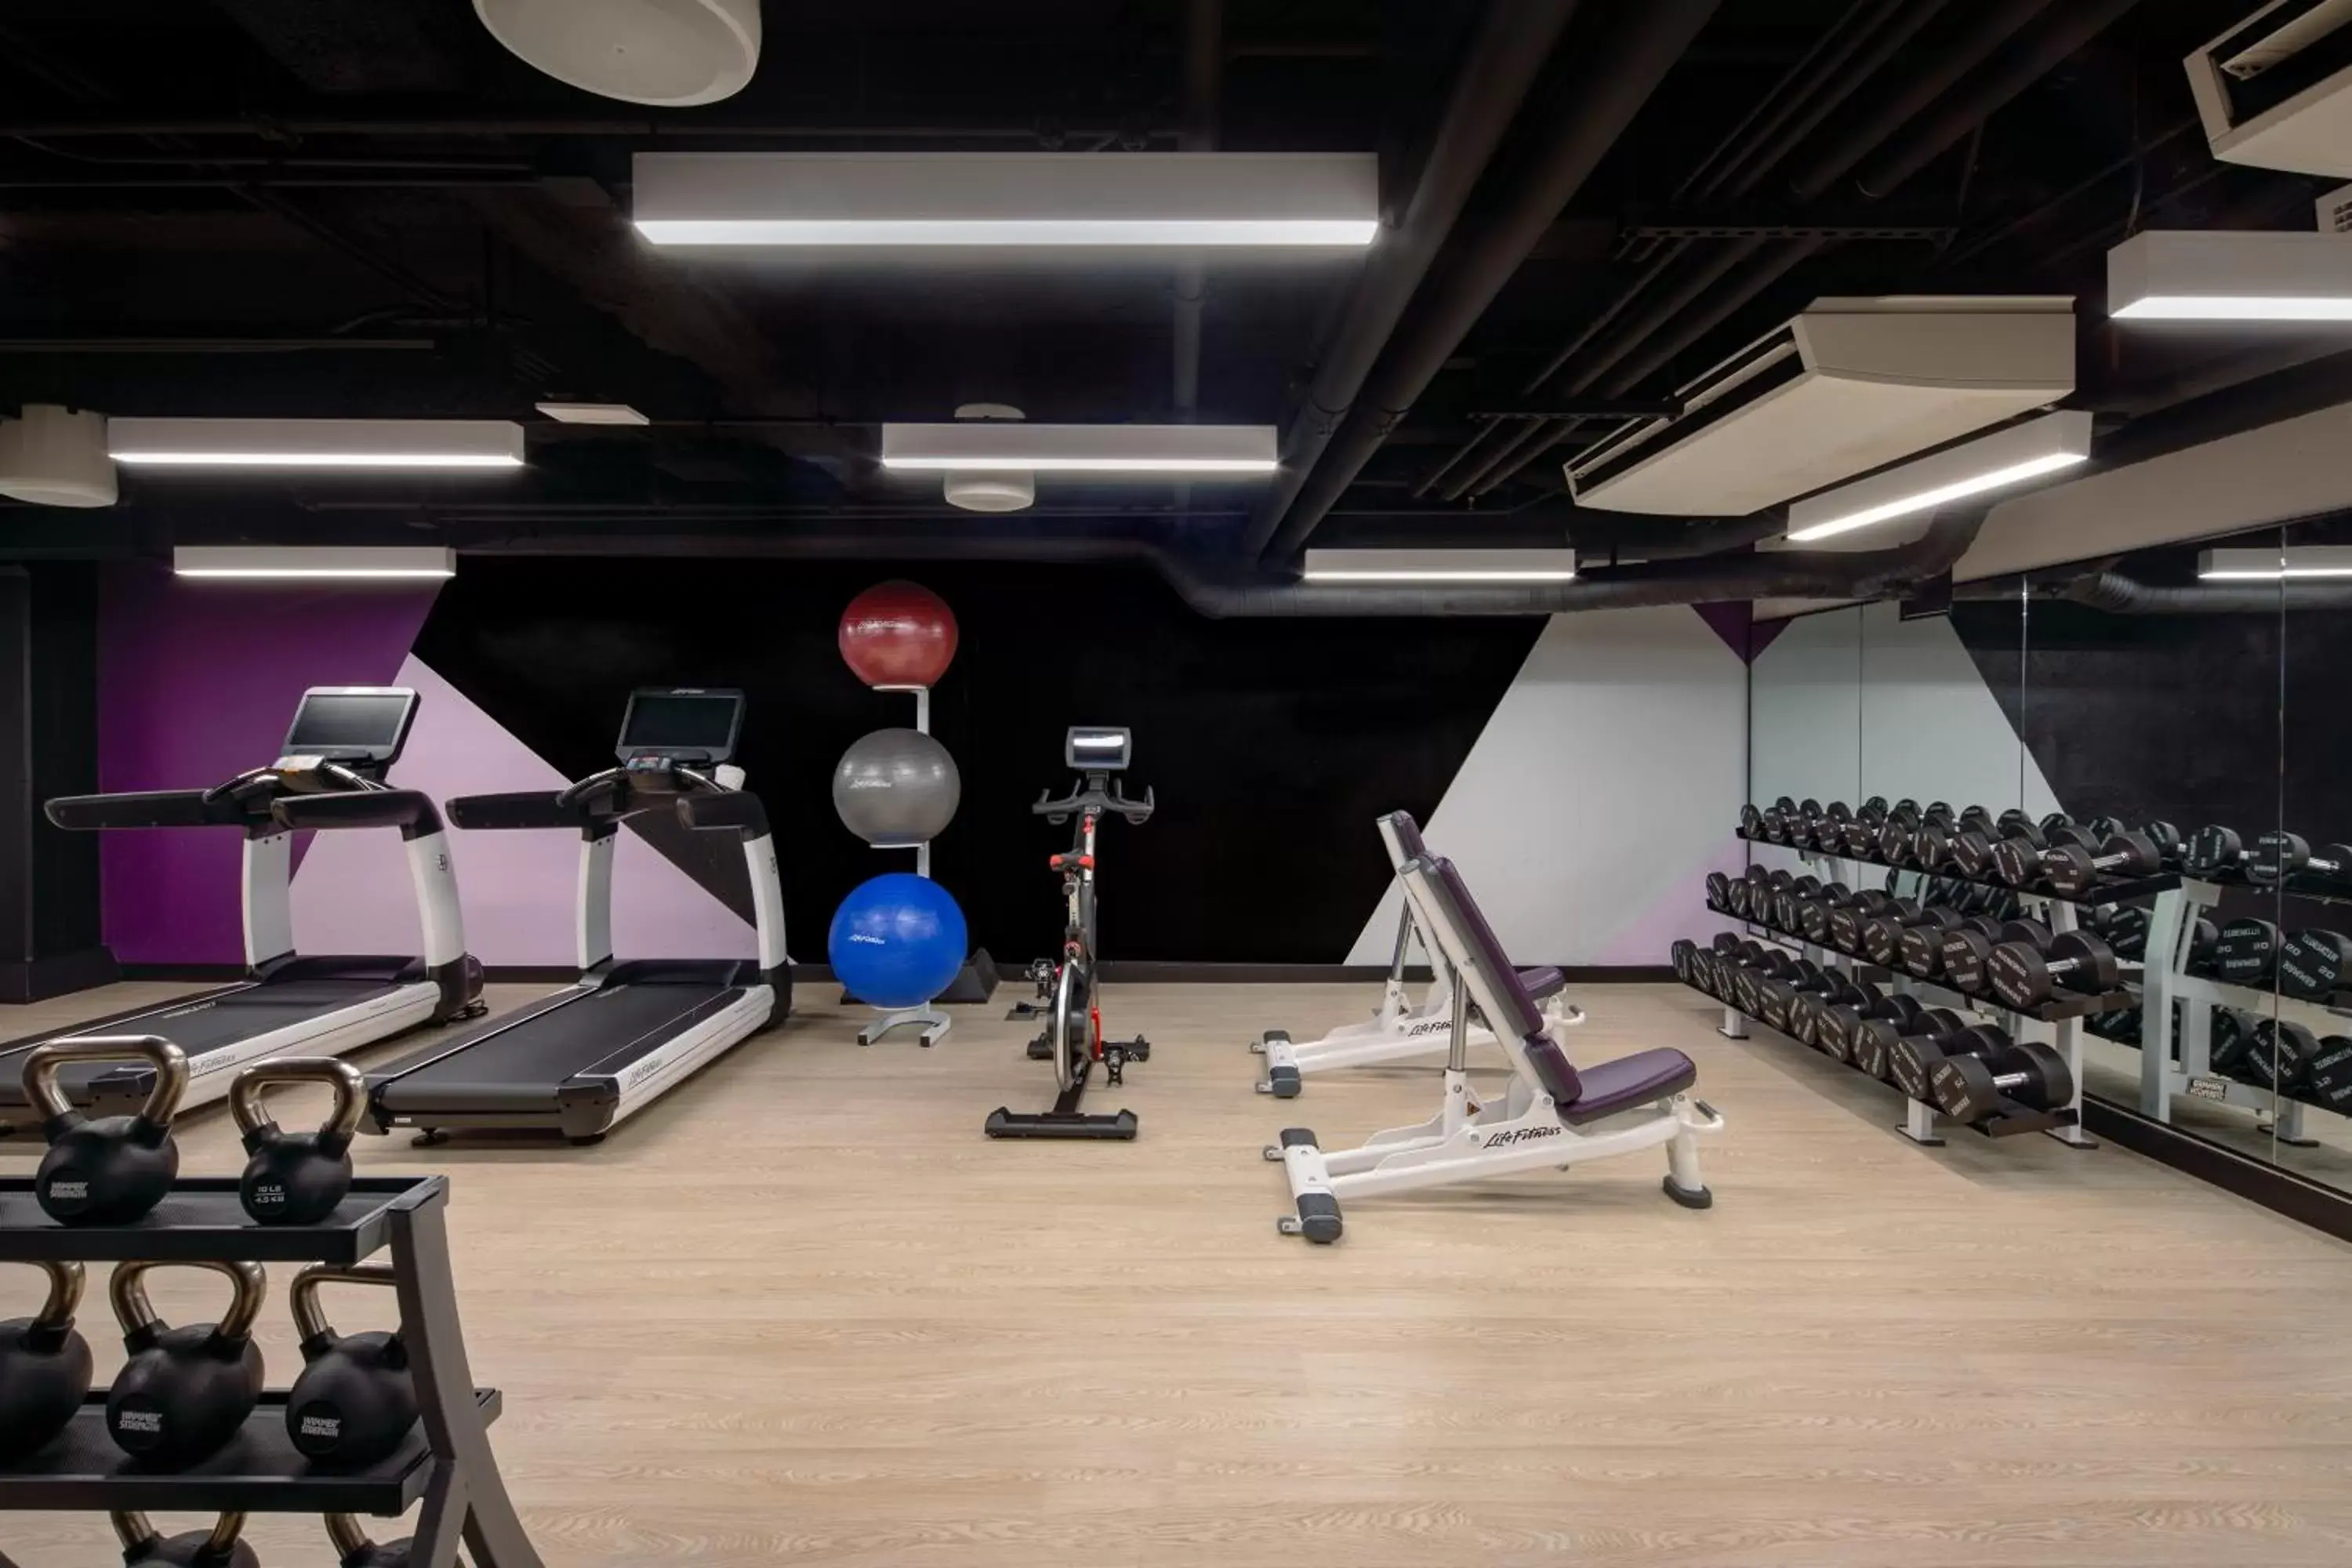 Fitness centre/facilities, Fitness Center/Facilities in Yotel San Francisco